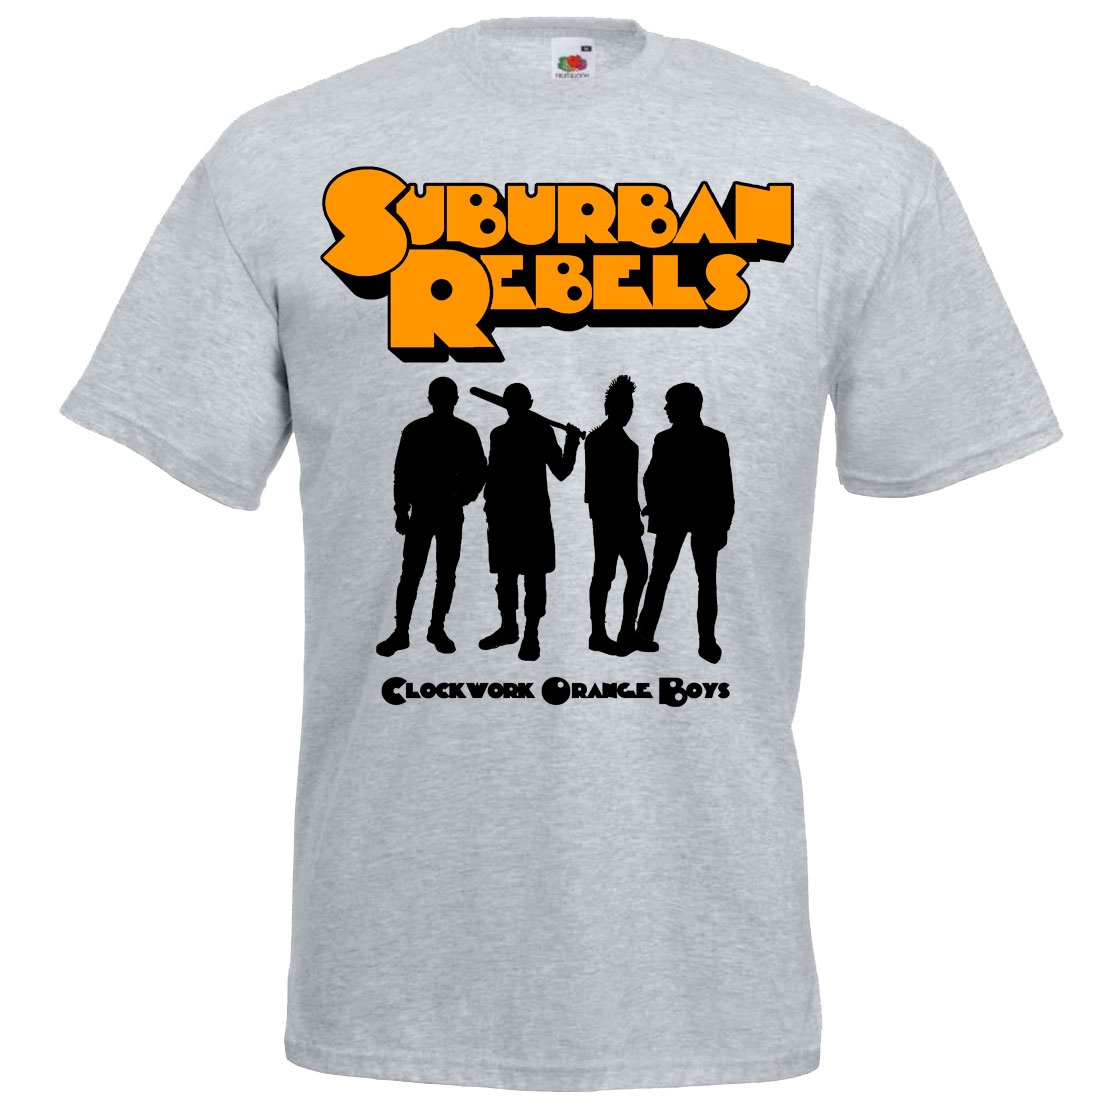 SUBURBAN REBELS Clockwork Orange Boys grey tshirt artwork